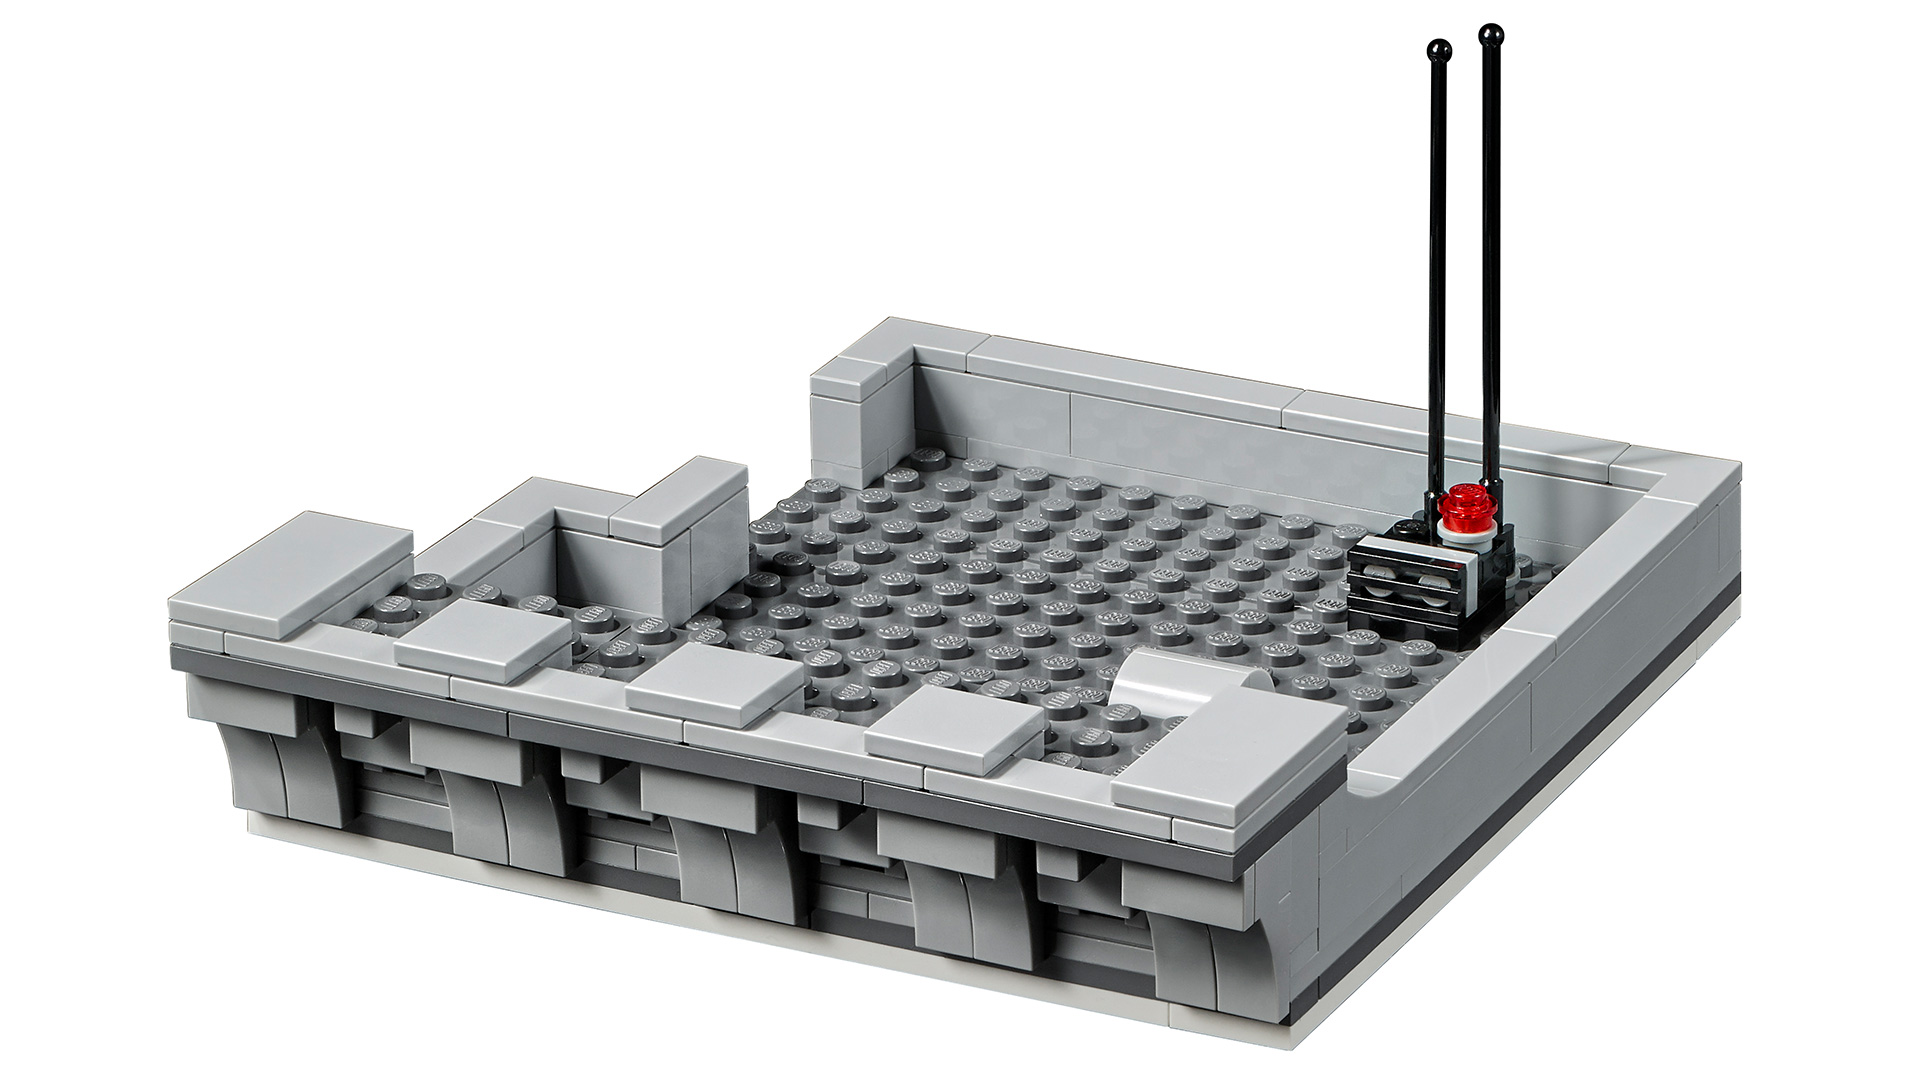 LEGO 10278 – Police Station